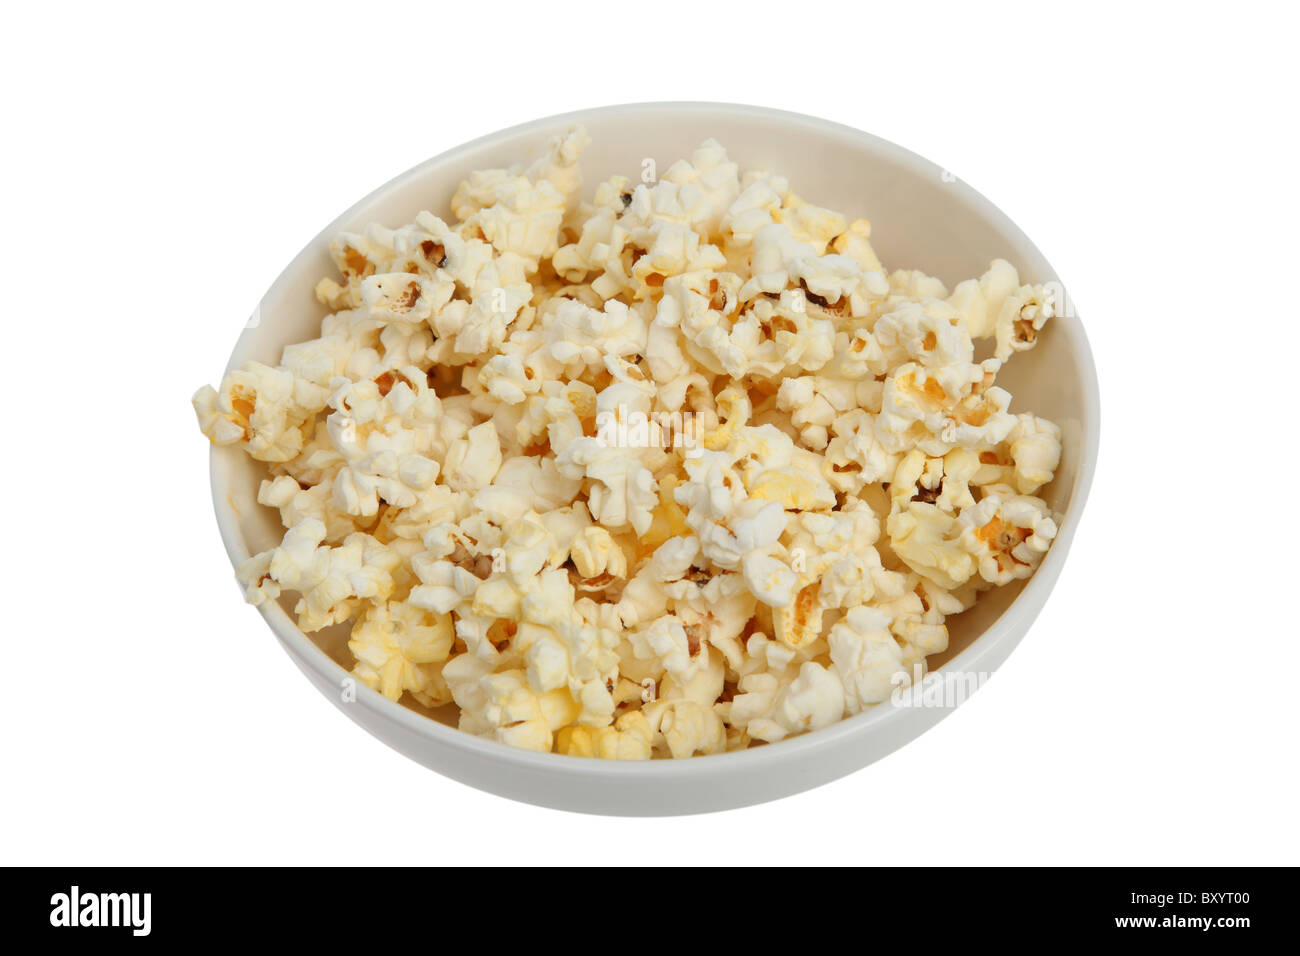 Popcorn in bowl on white background Stock Photo